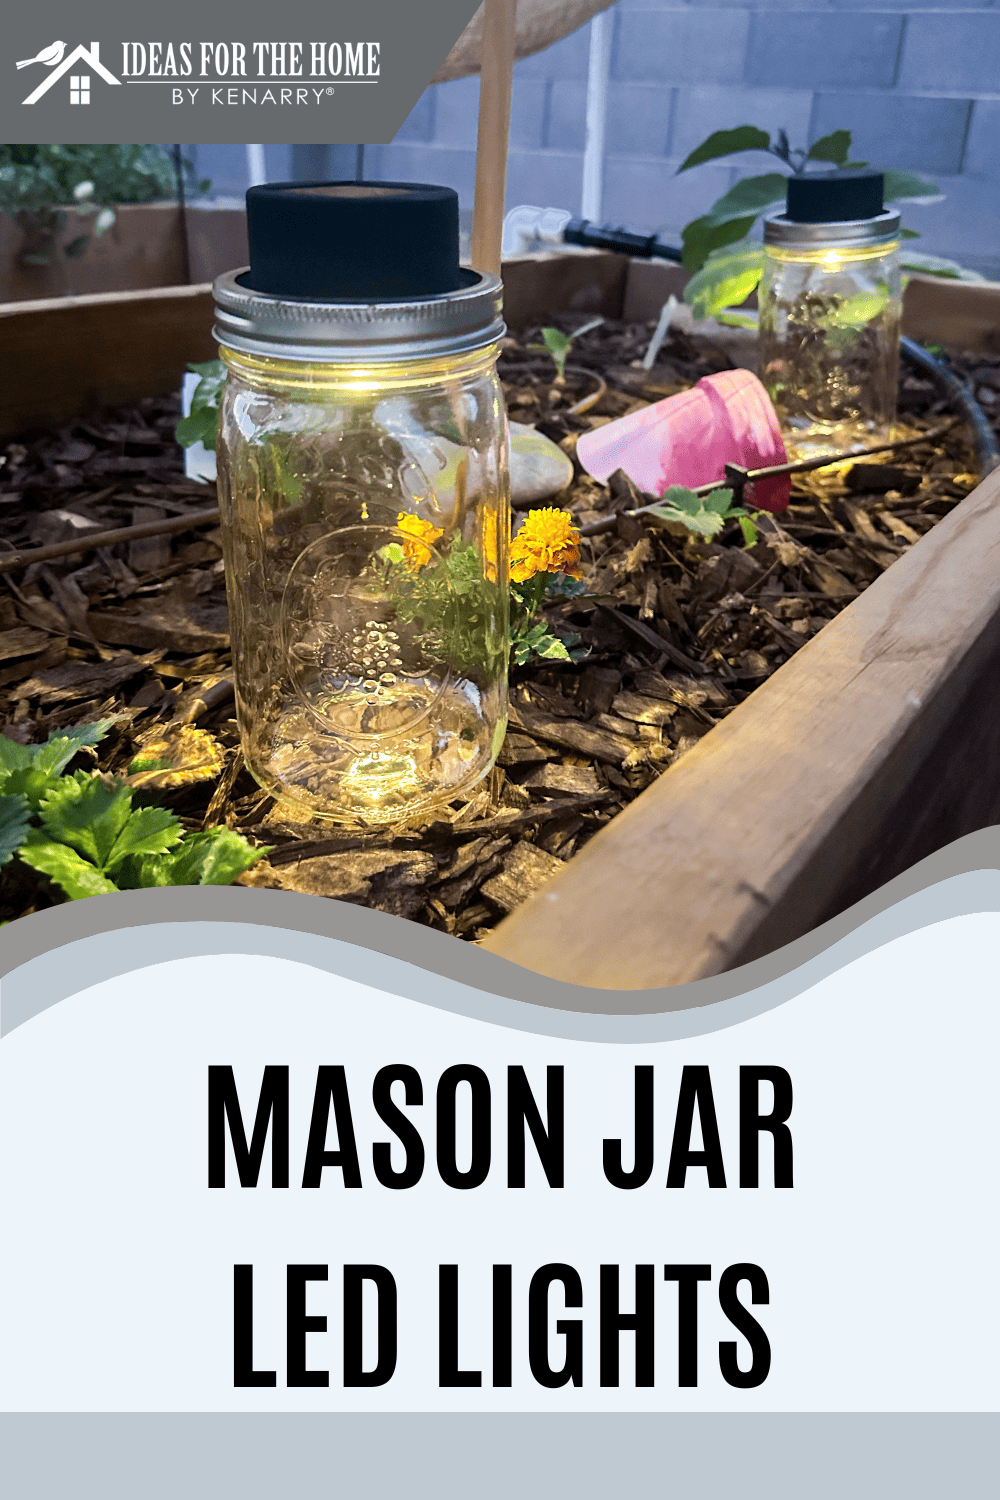 2 Mason jar lights sitting in a garden